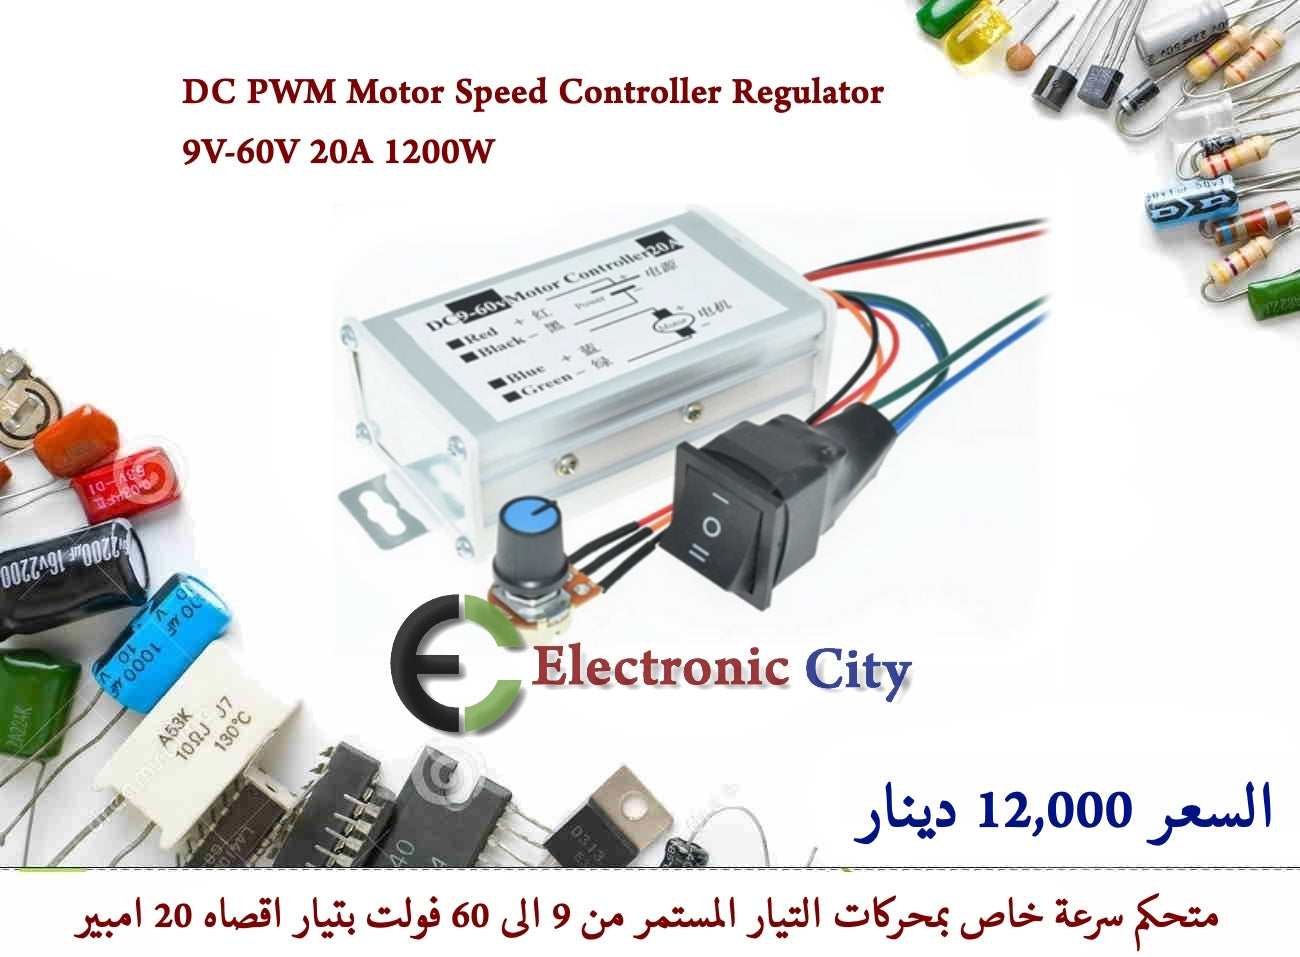 DC PWM Motor Speed Controller Regulator 9V-60V 20A 1200W   #O10 X-JL0249A